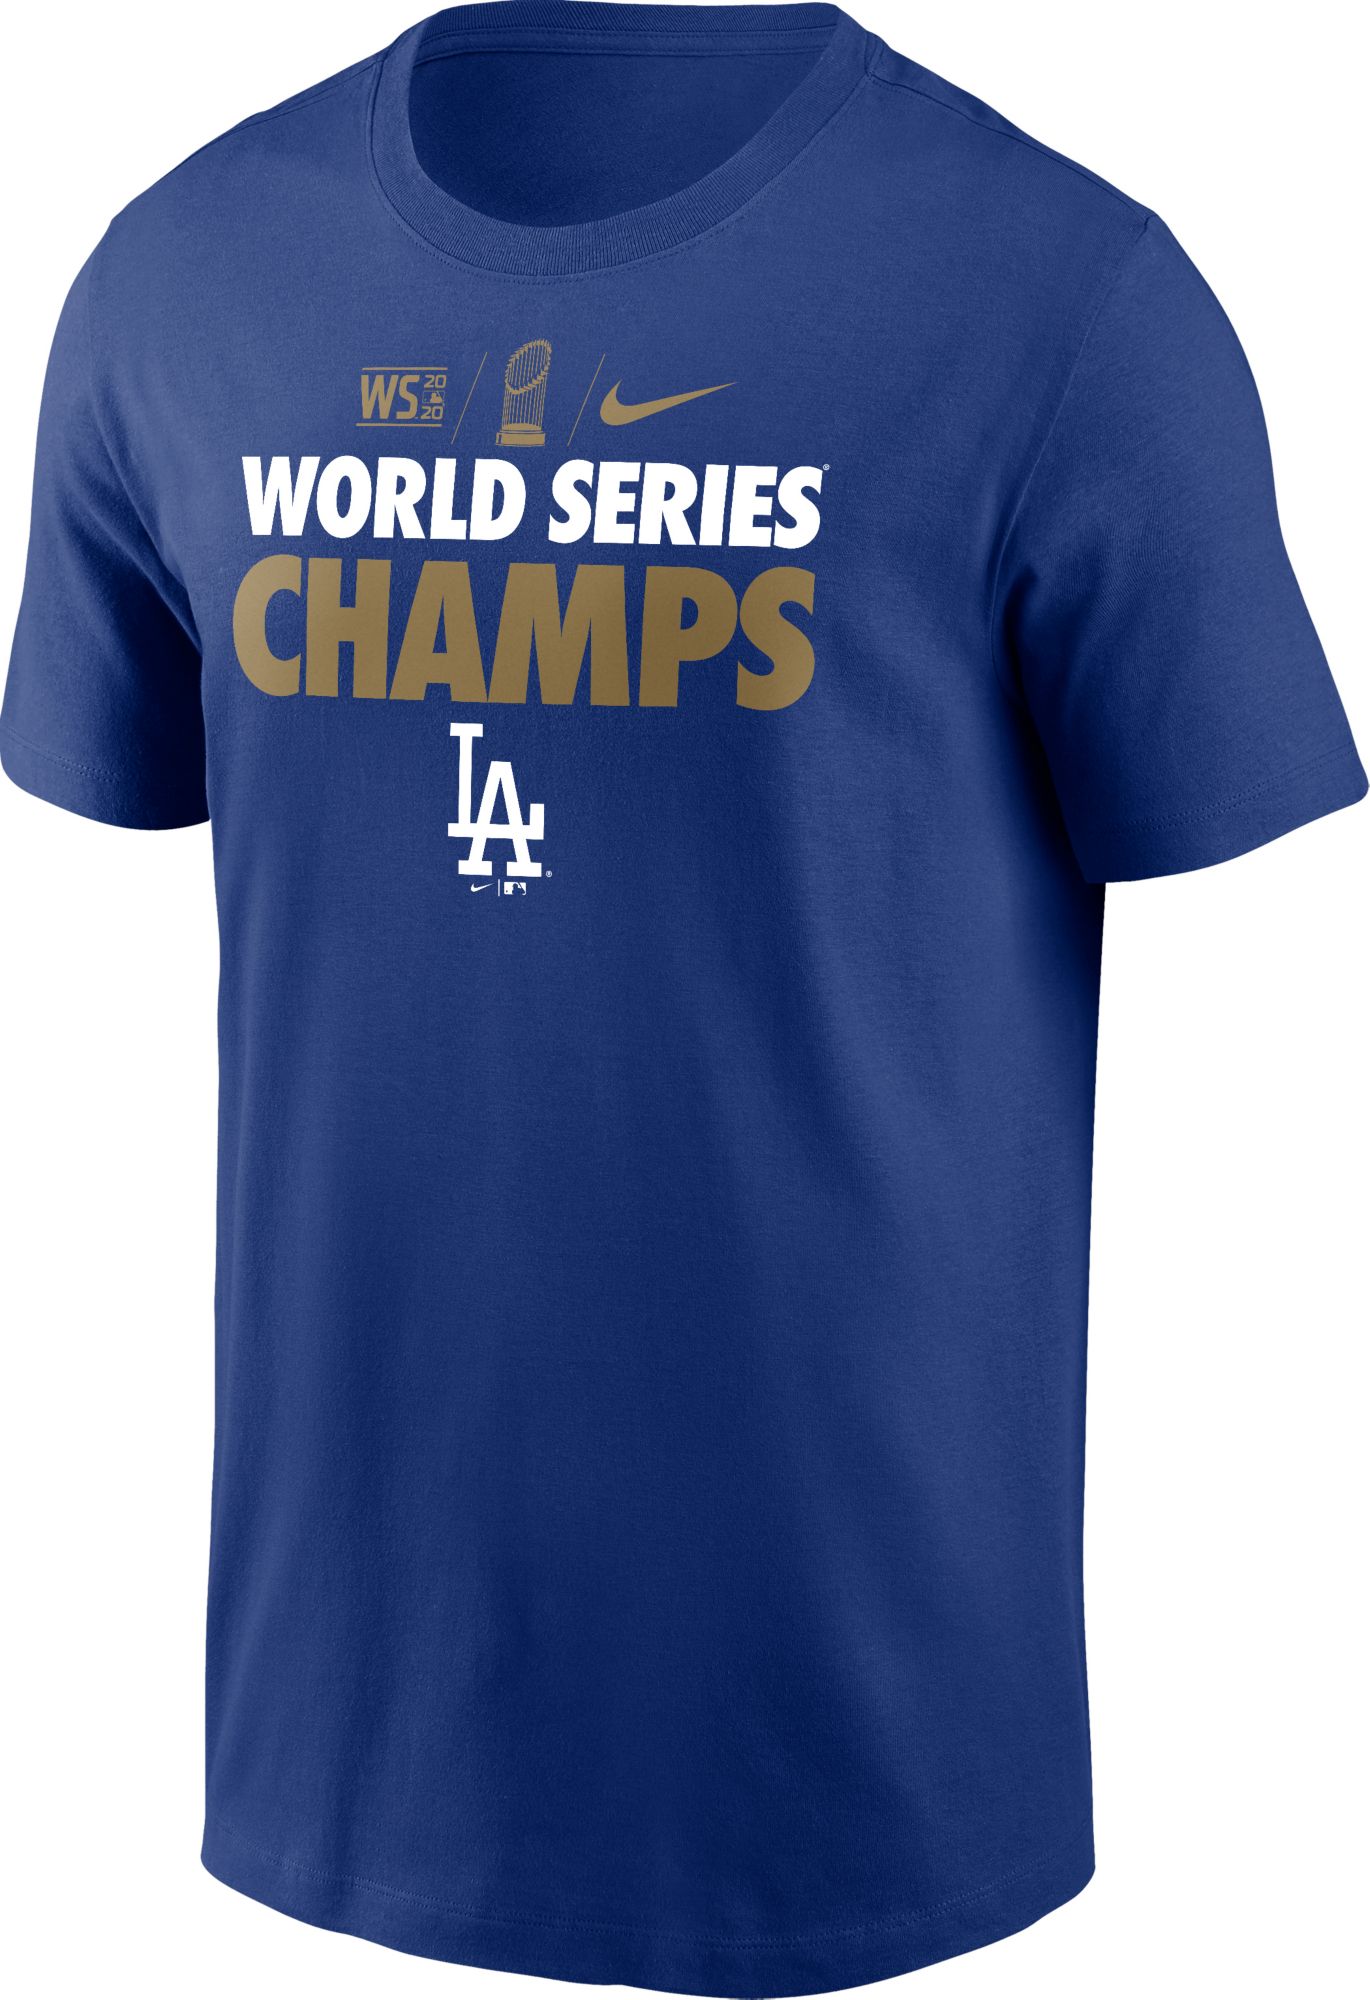 world series champions t shirt